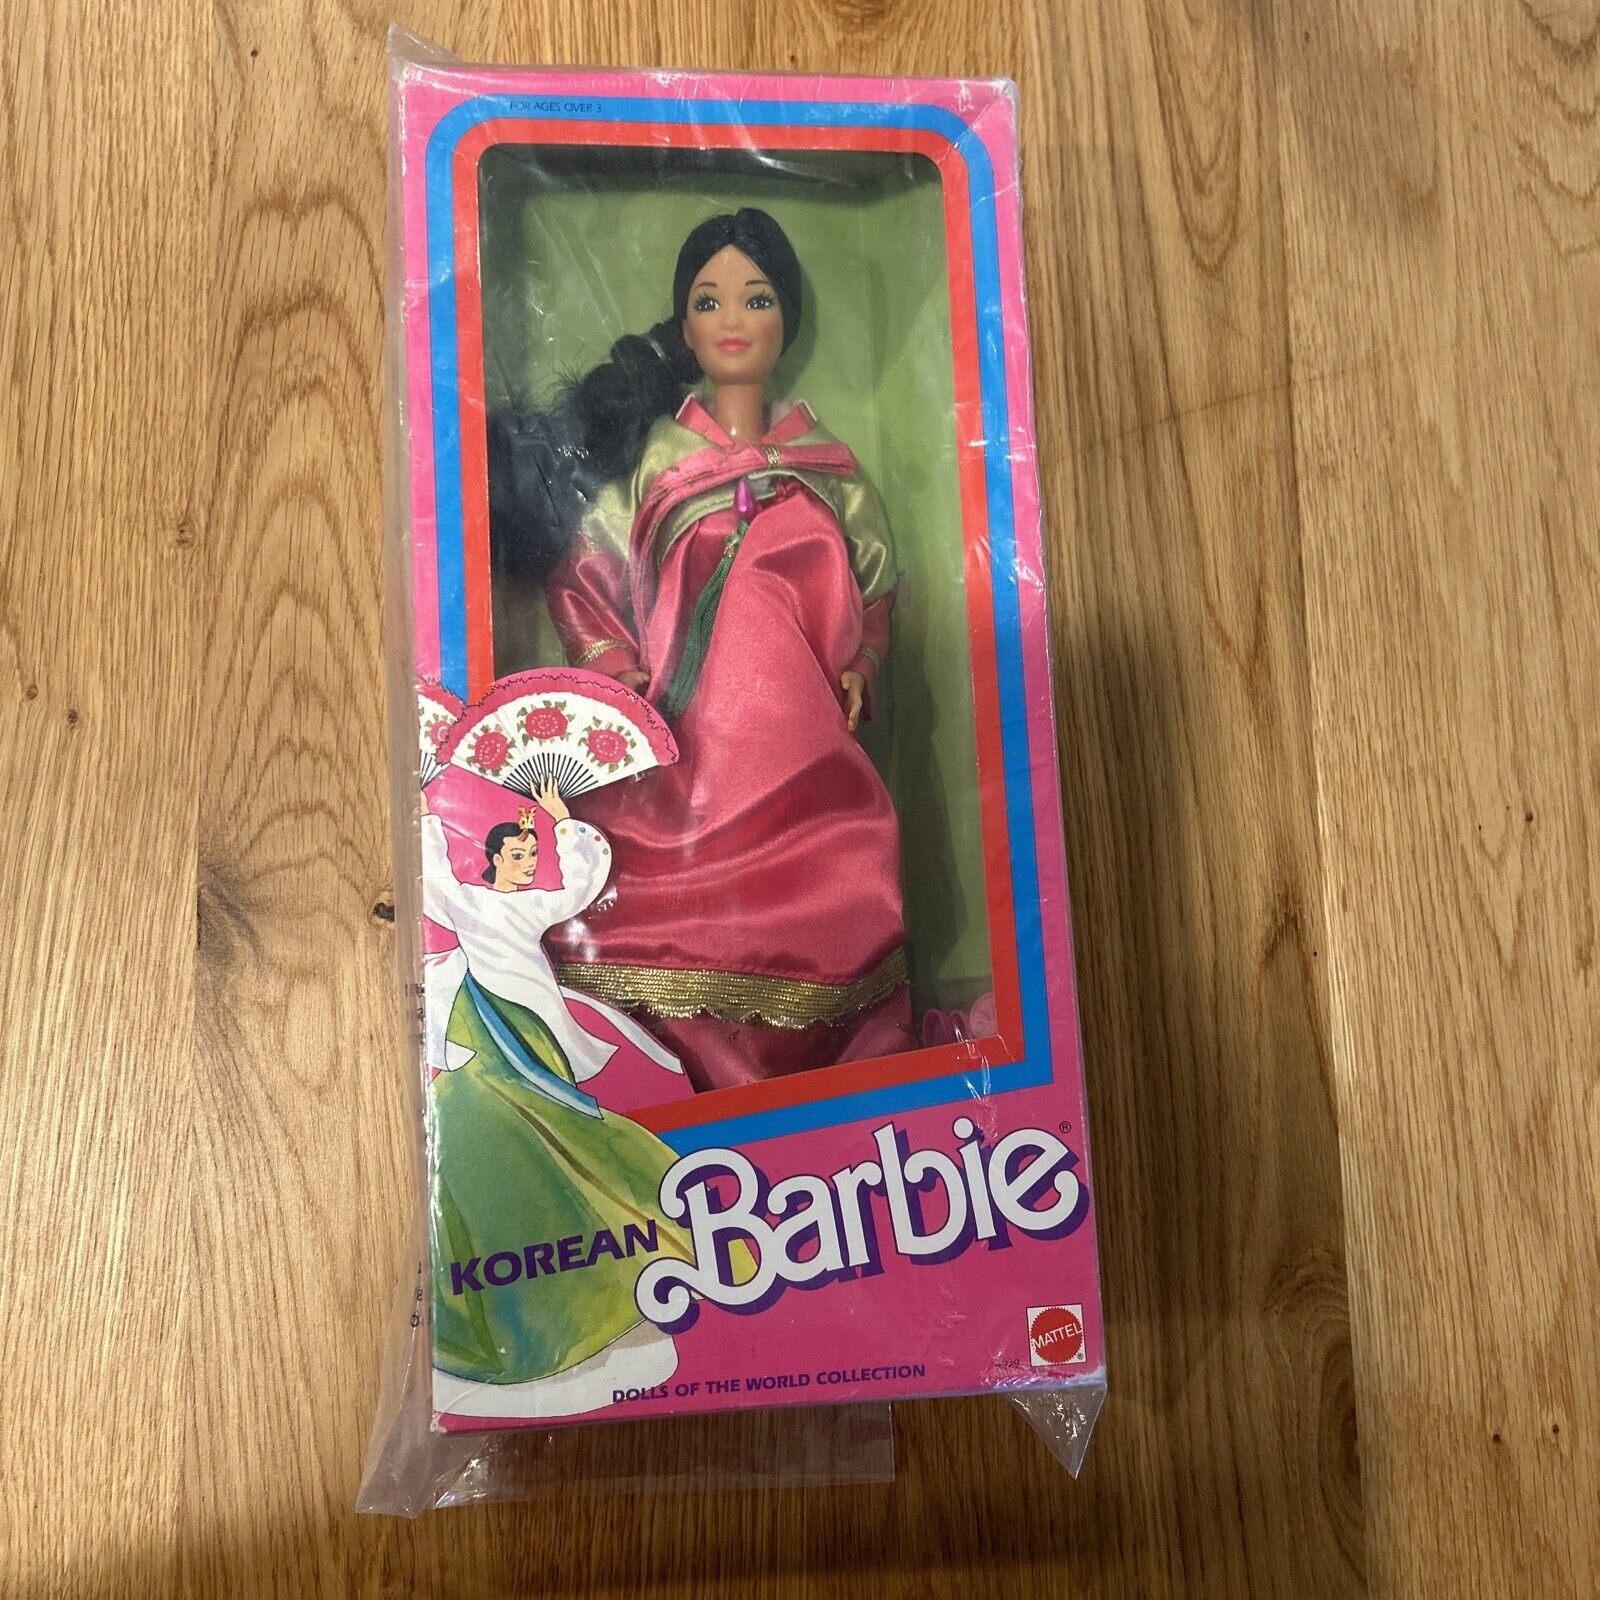 Dolls Of The World Collection 1987 Korean Barbie Doll Asia NIB NRFB Mattel